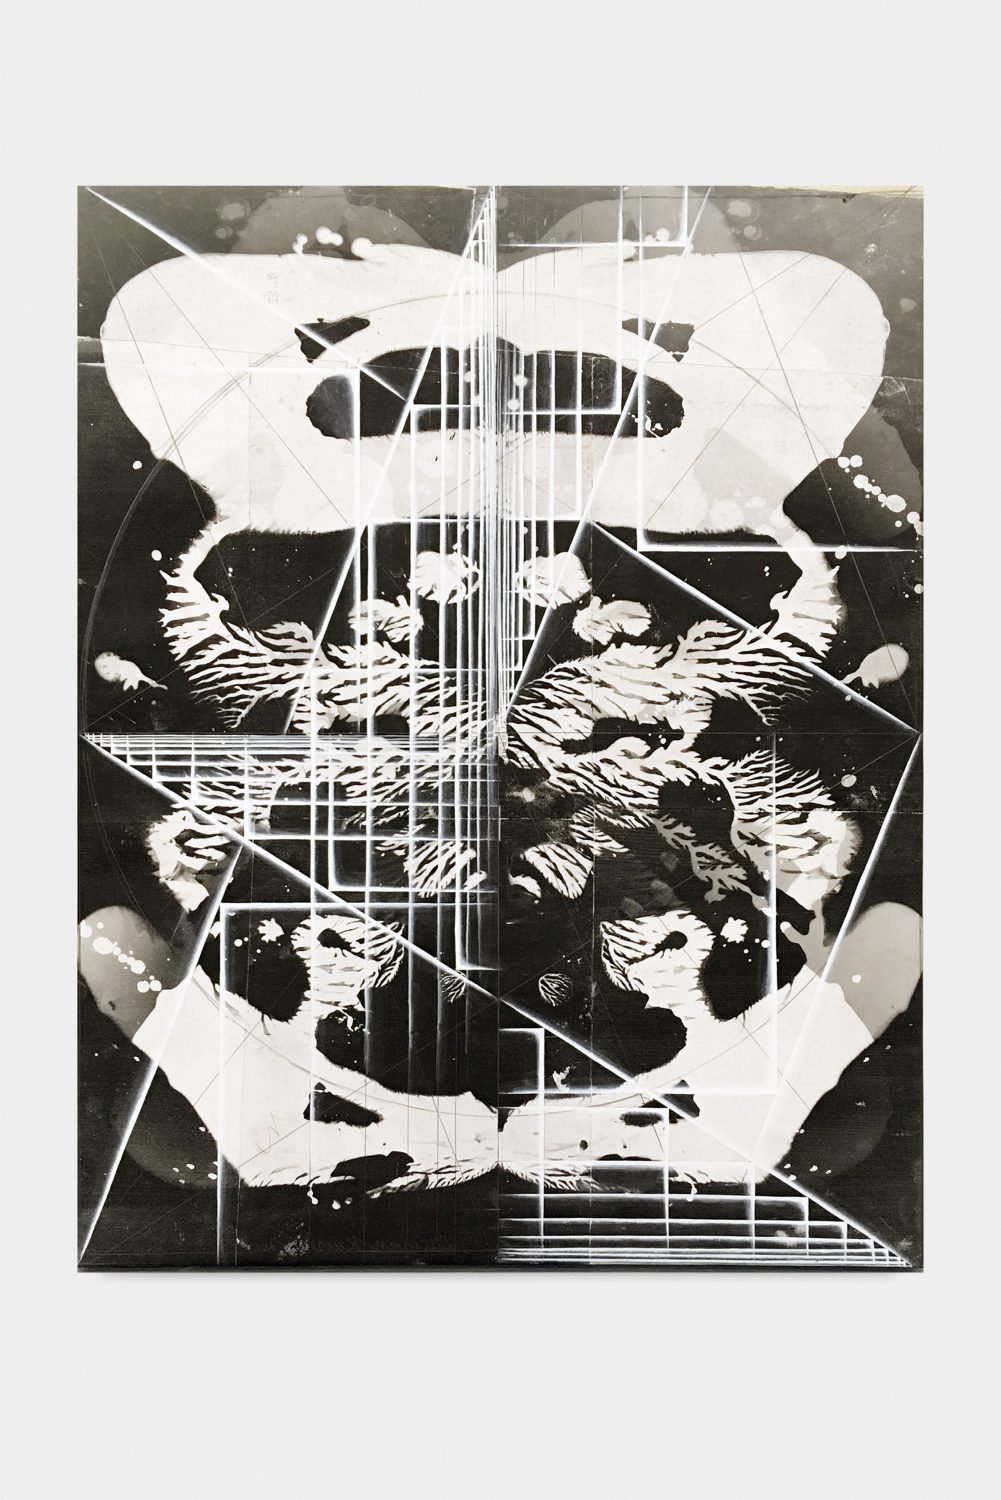 Tillman KaiserUntitled, 2017Eggtempera and photogram on paper on canvas180 x 140 cm